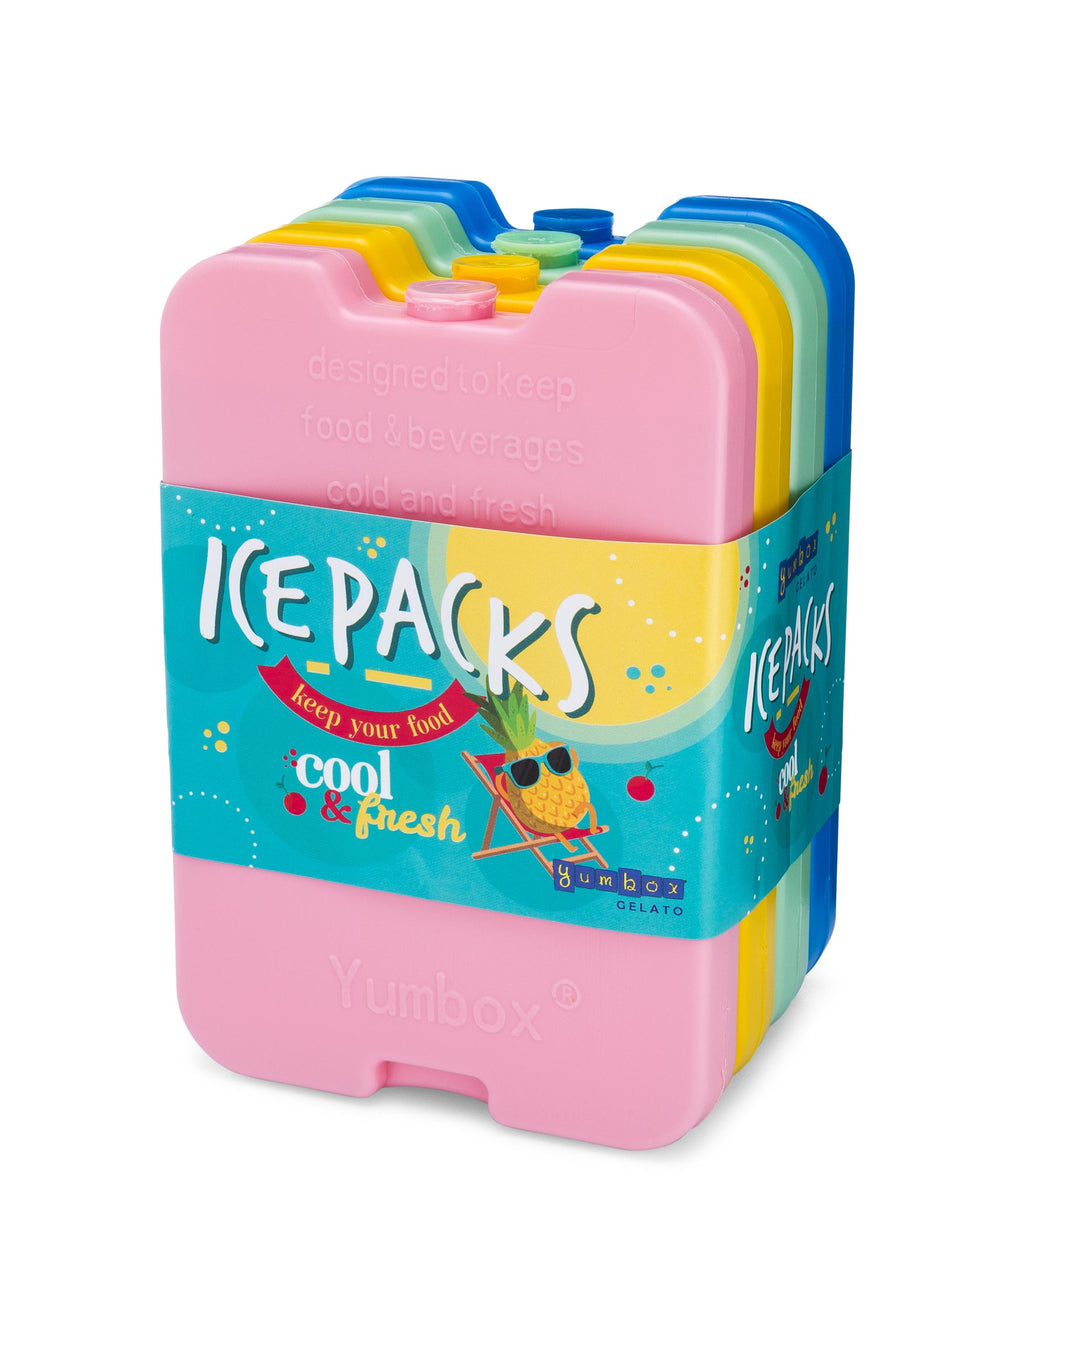 Yumbox Ice Packs - set of 4 Multi - Cool Pack, Slim Long-Lasting Ice P